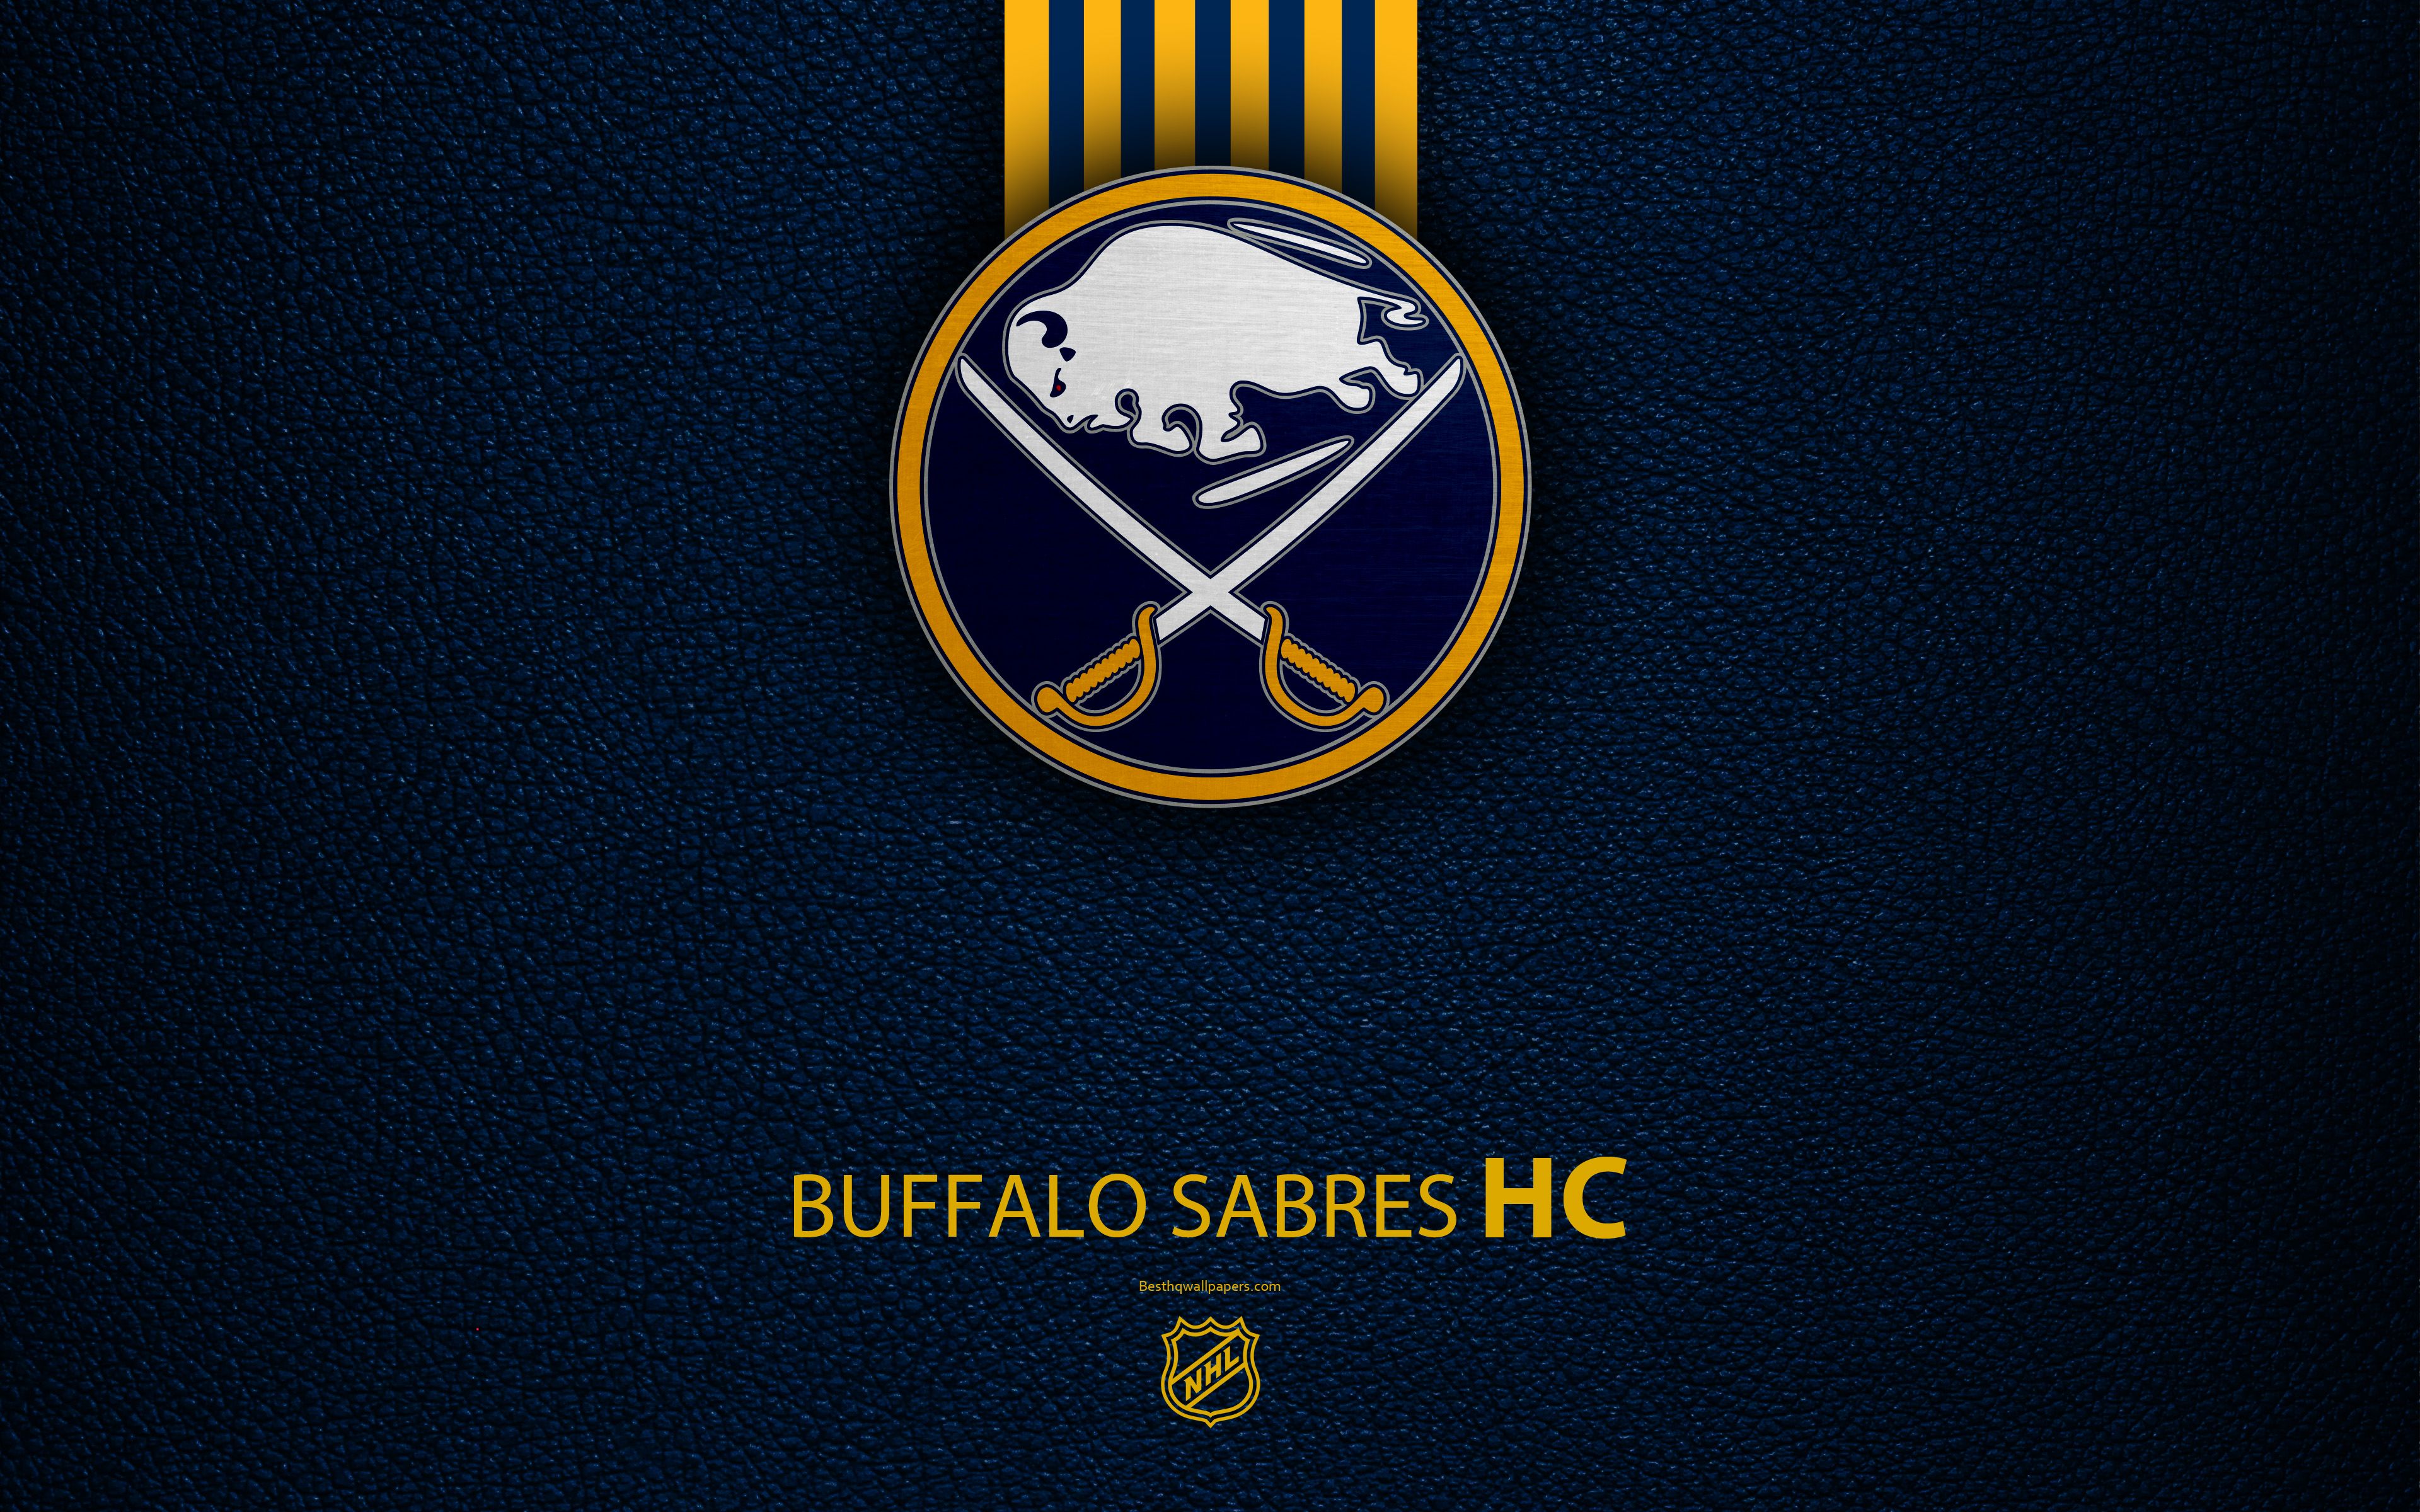 Buffalo Sabres (NHL) iPhone X/XS/XR/11 PRO Lock Screen Chr…